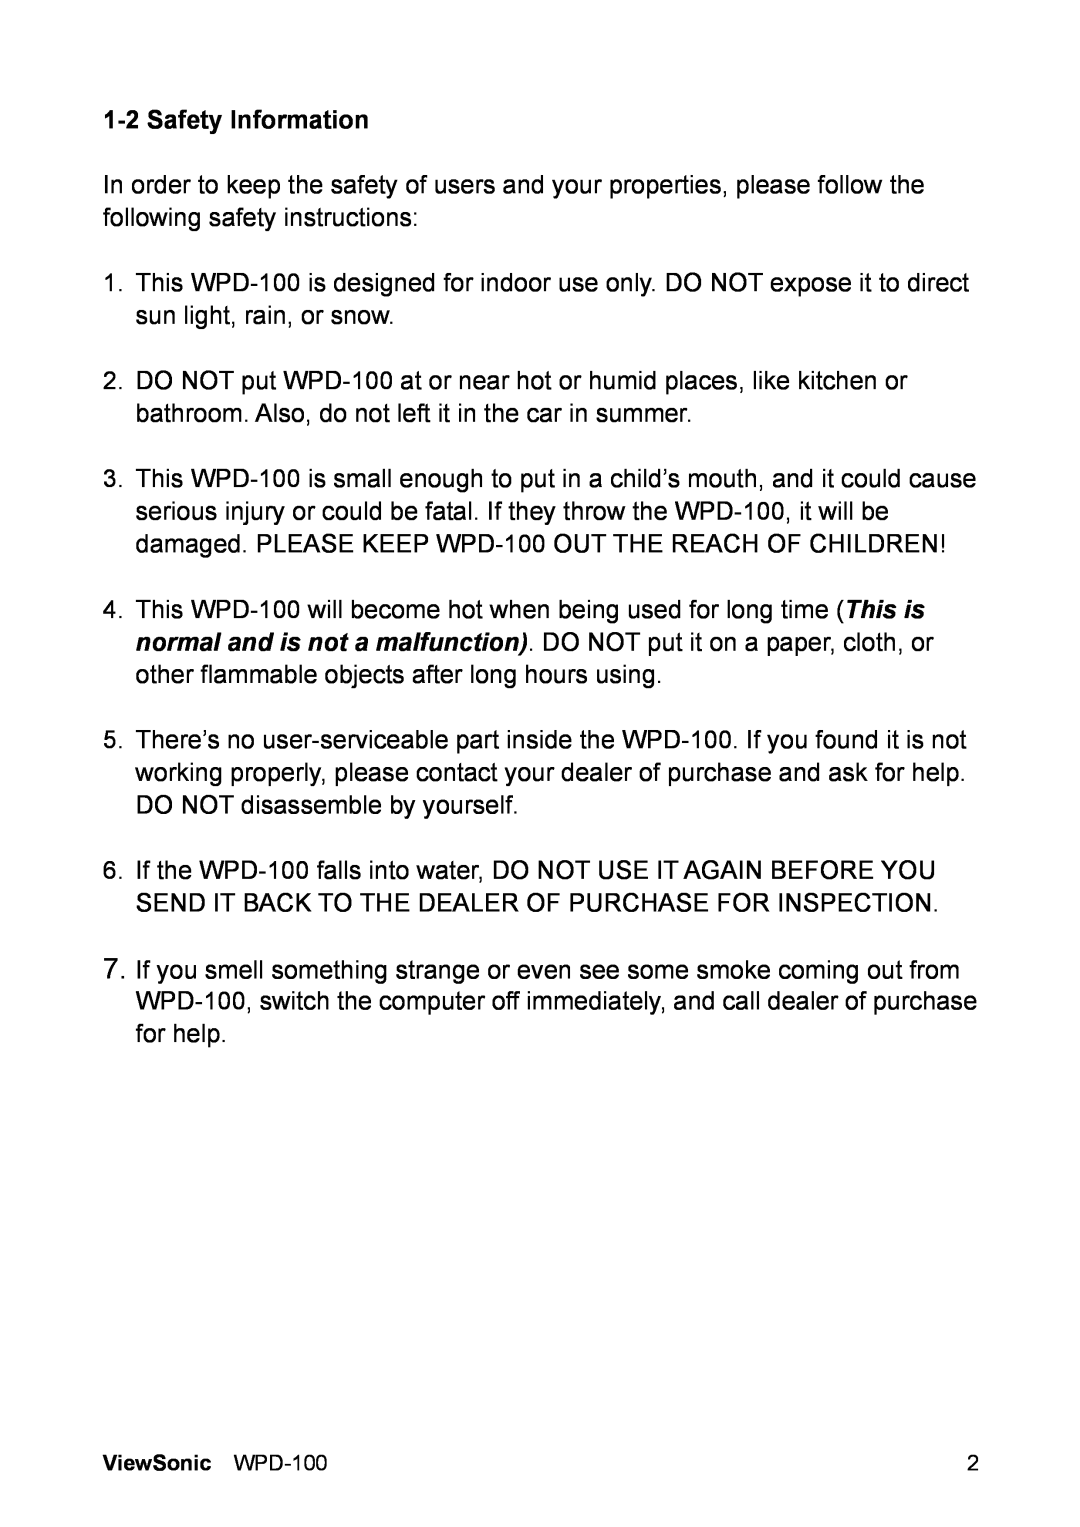 ViewSonic VS13789 manual 1-2Safety Information 